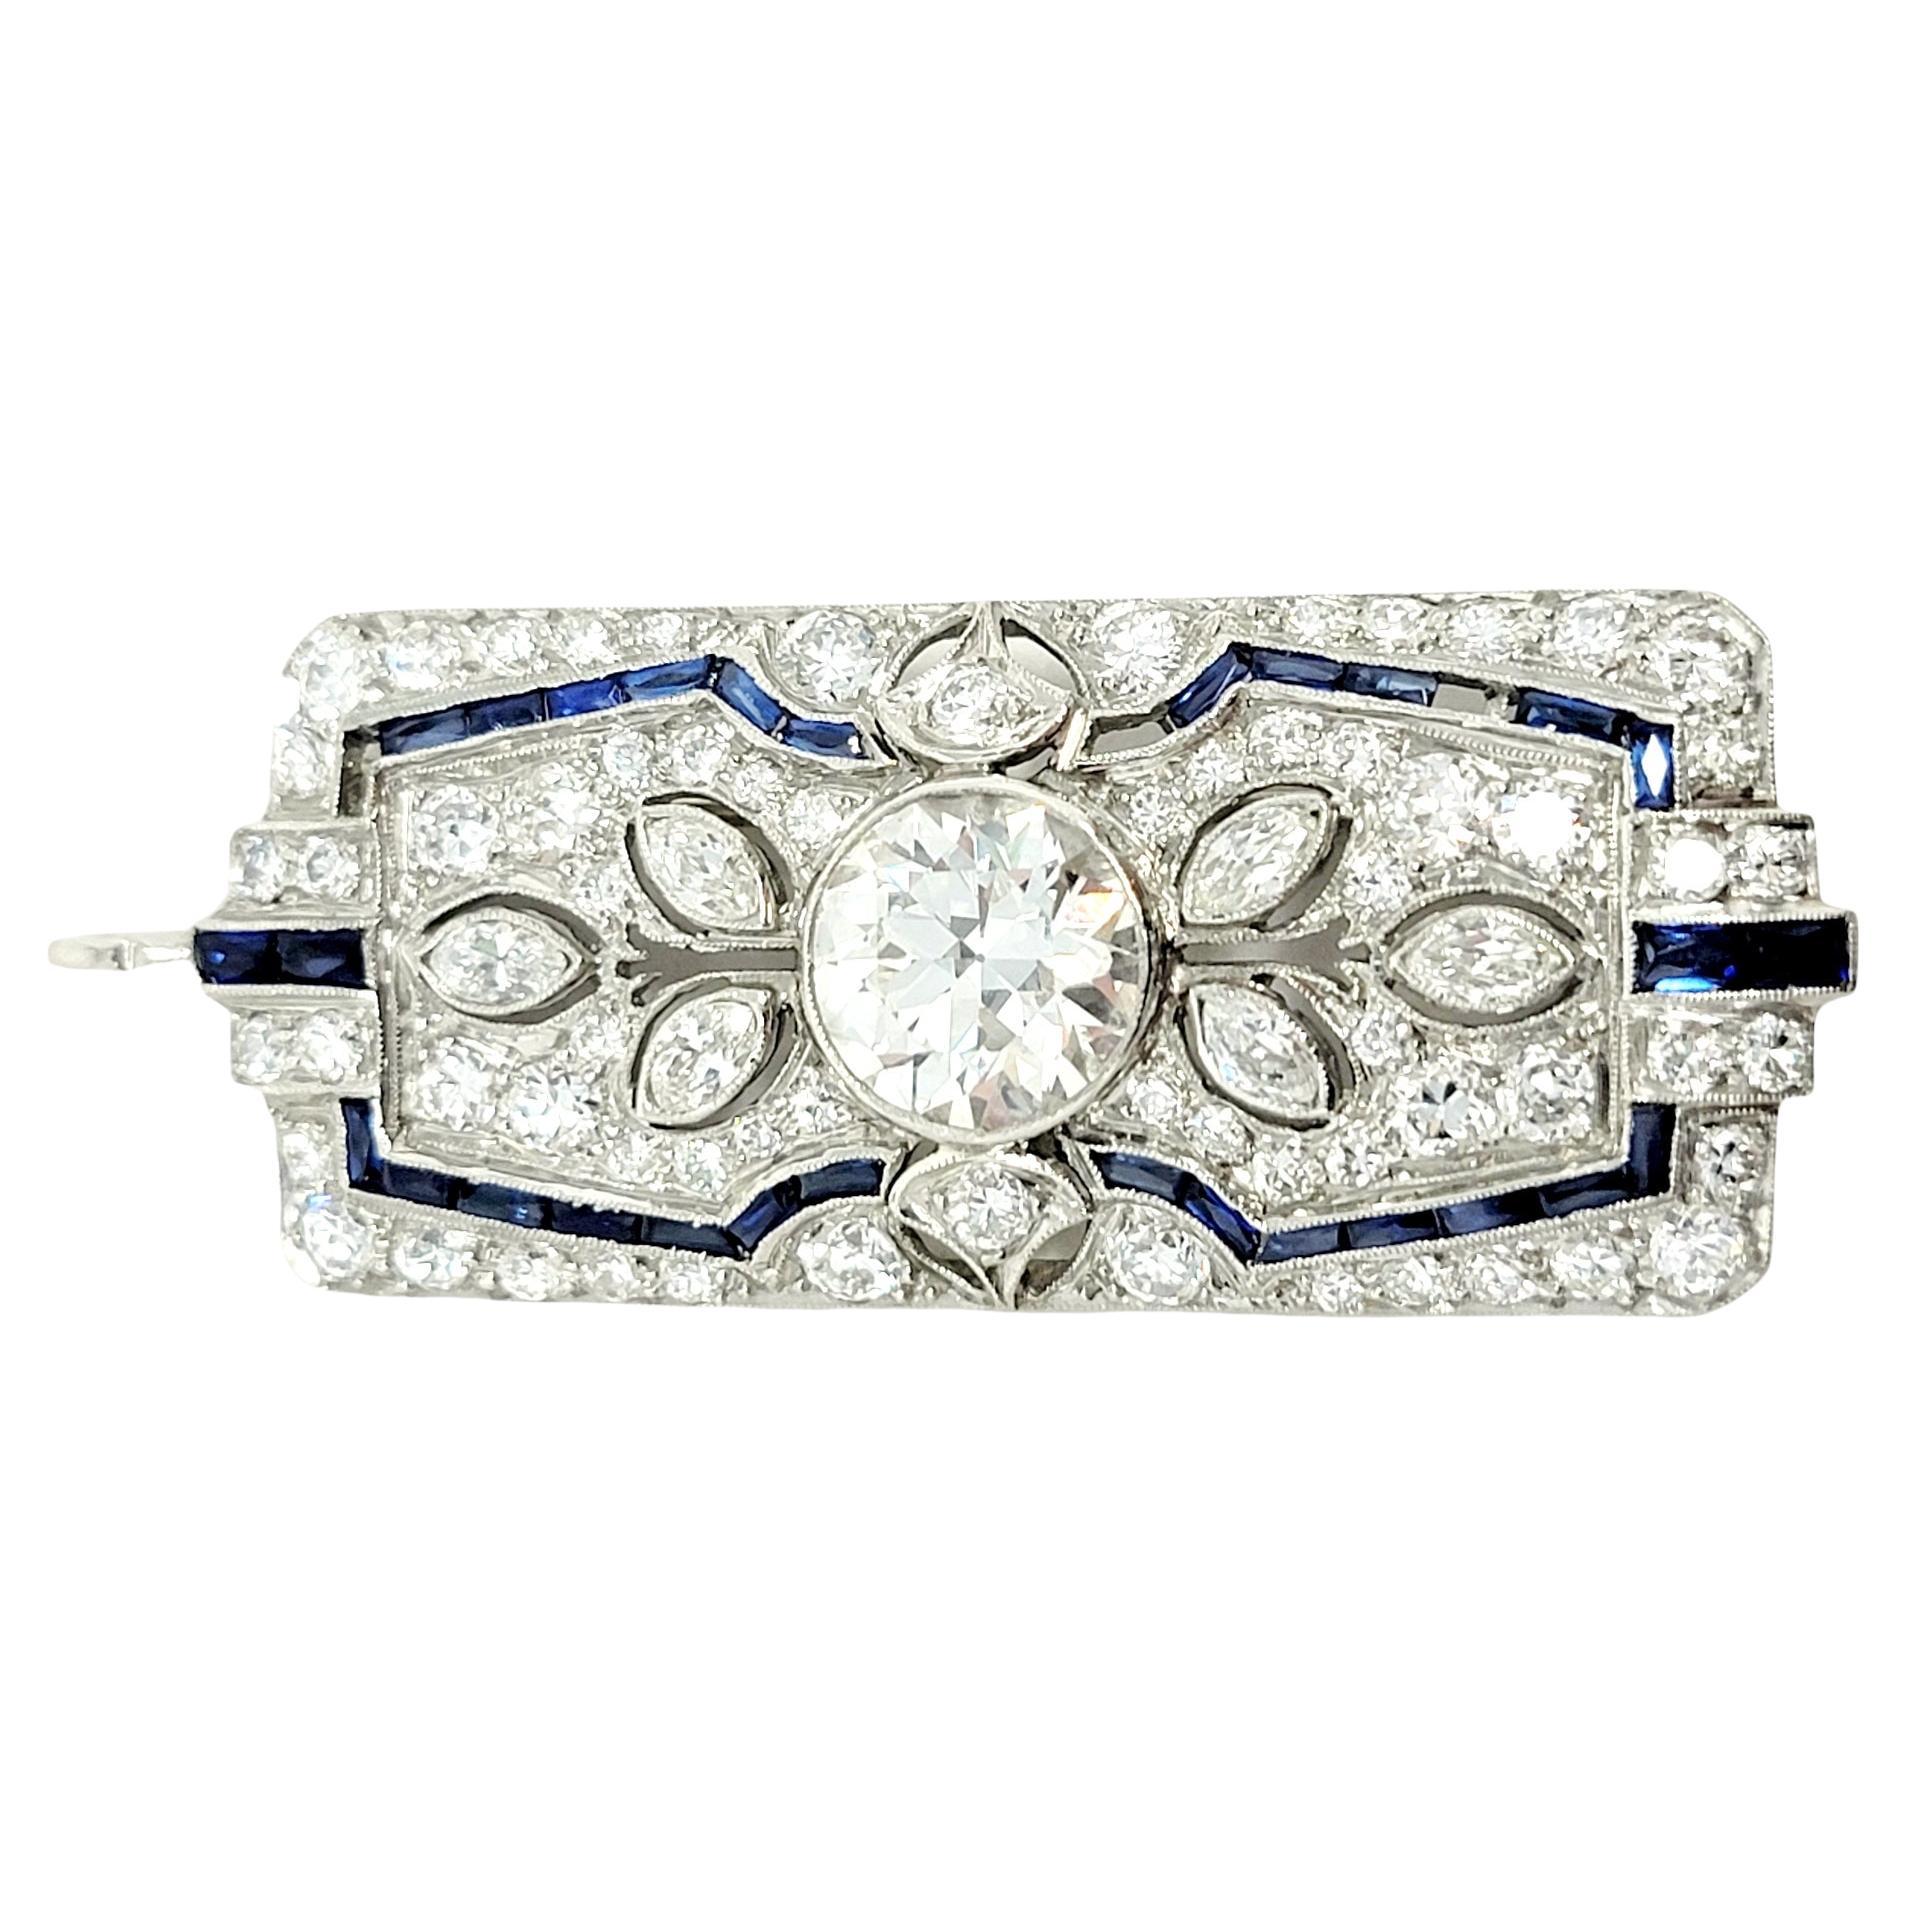 Vintage Ornate Diamond and Sapphire Rectangle Brooch/Pendant Bar in Platinum